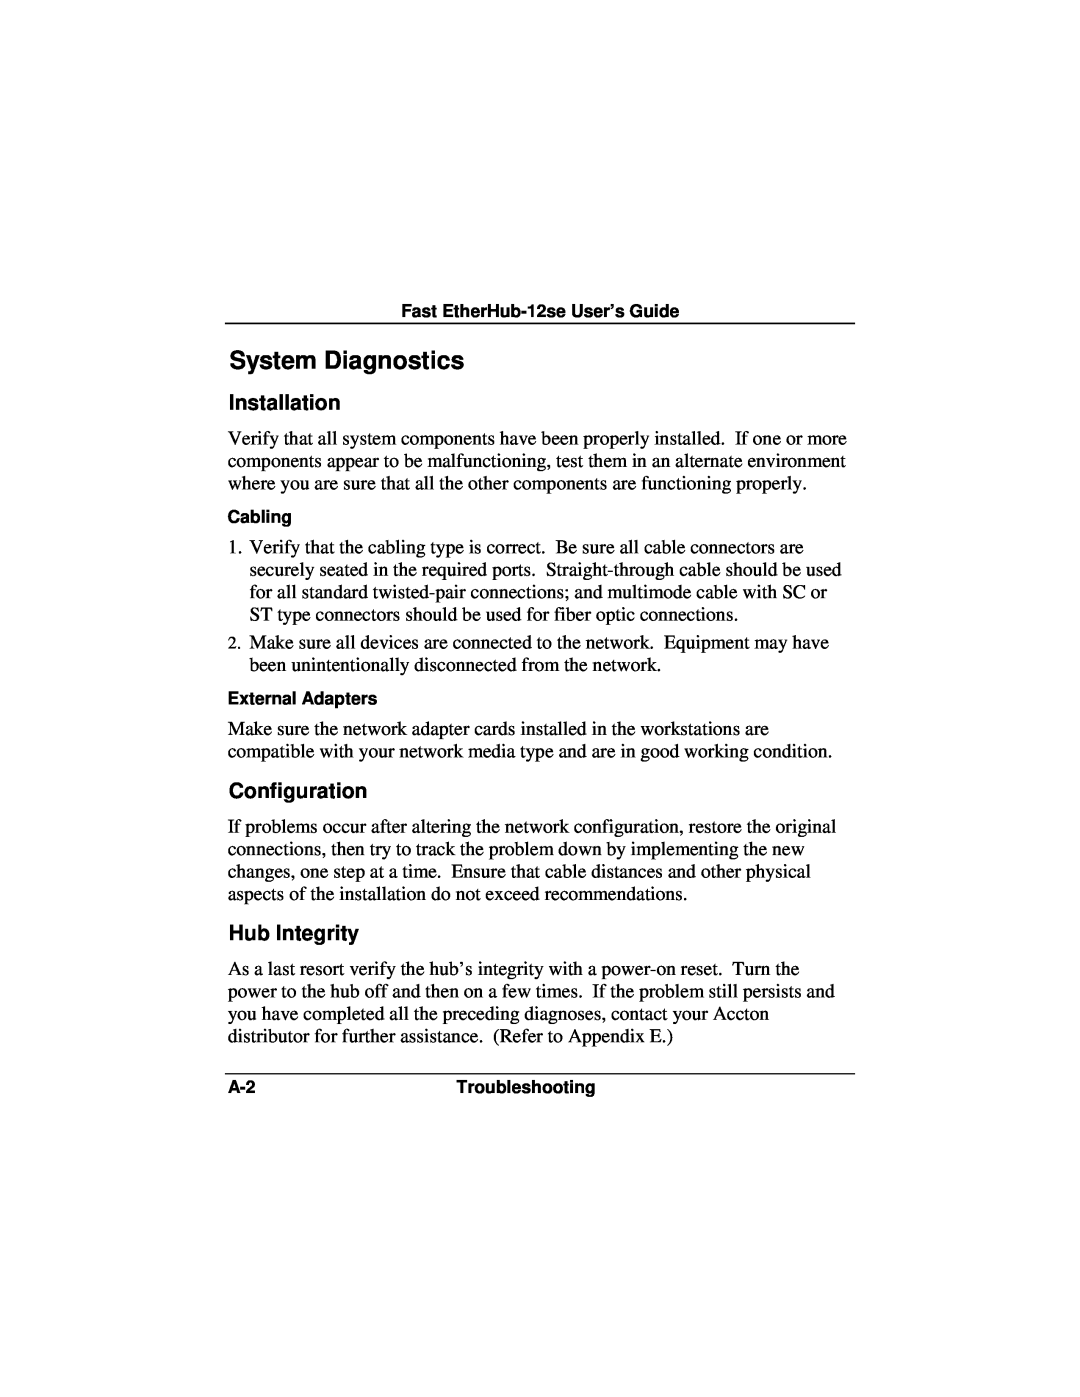 Accton Technology 12se manual System Diagnostics, Installation, Configuration, Hub Integrity 